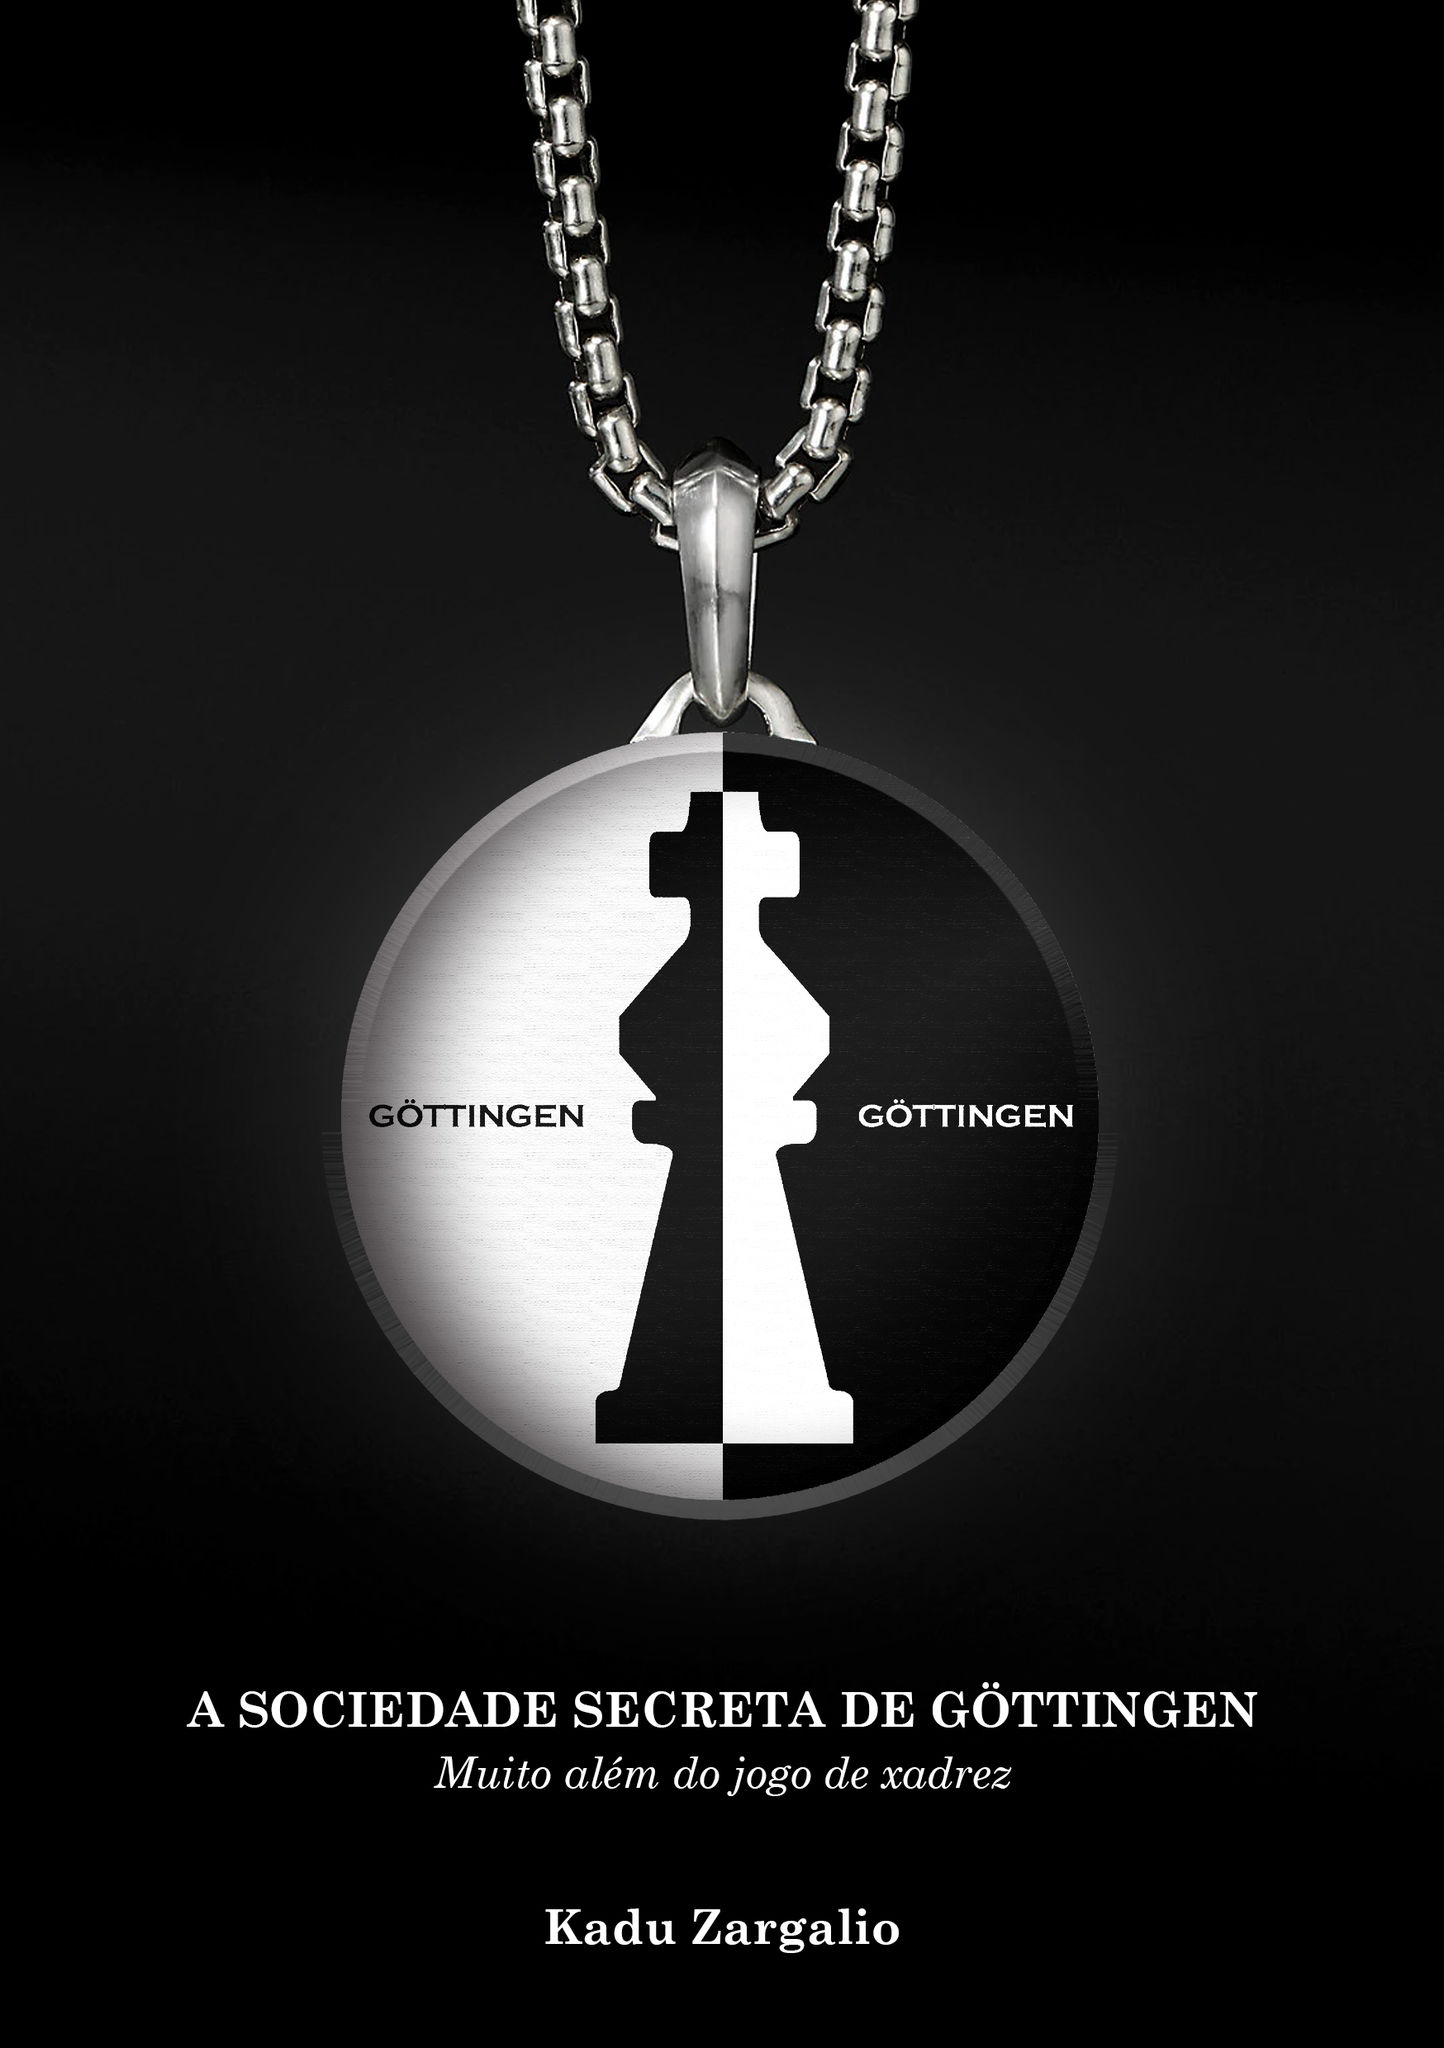 GöTTINGEN'S SECRET SOCIETY (WAY BEYOND CHESS)